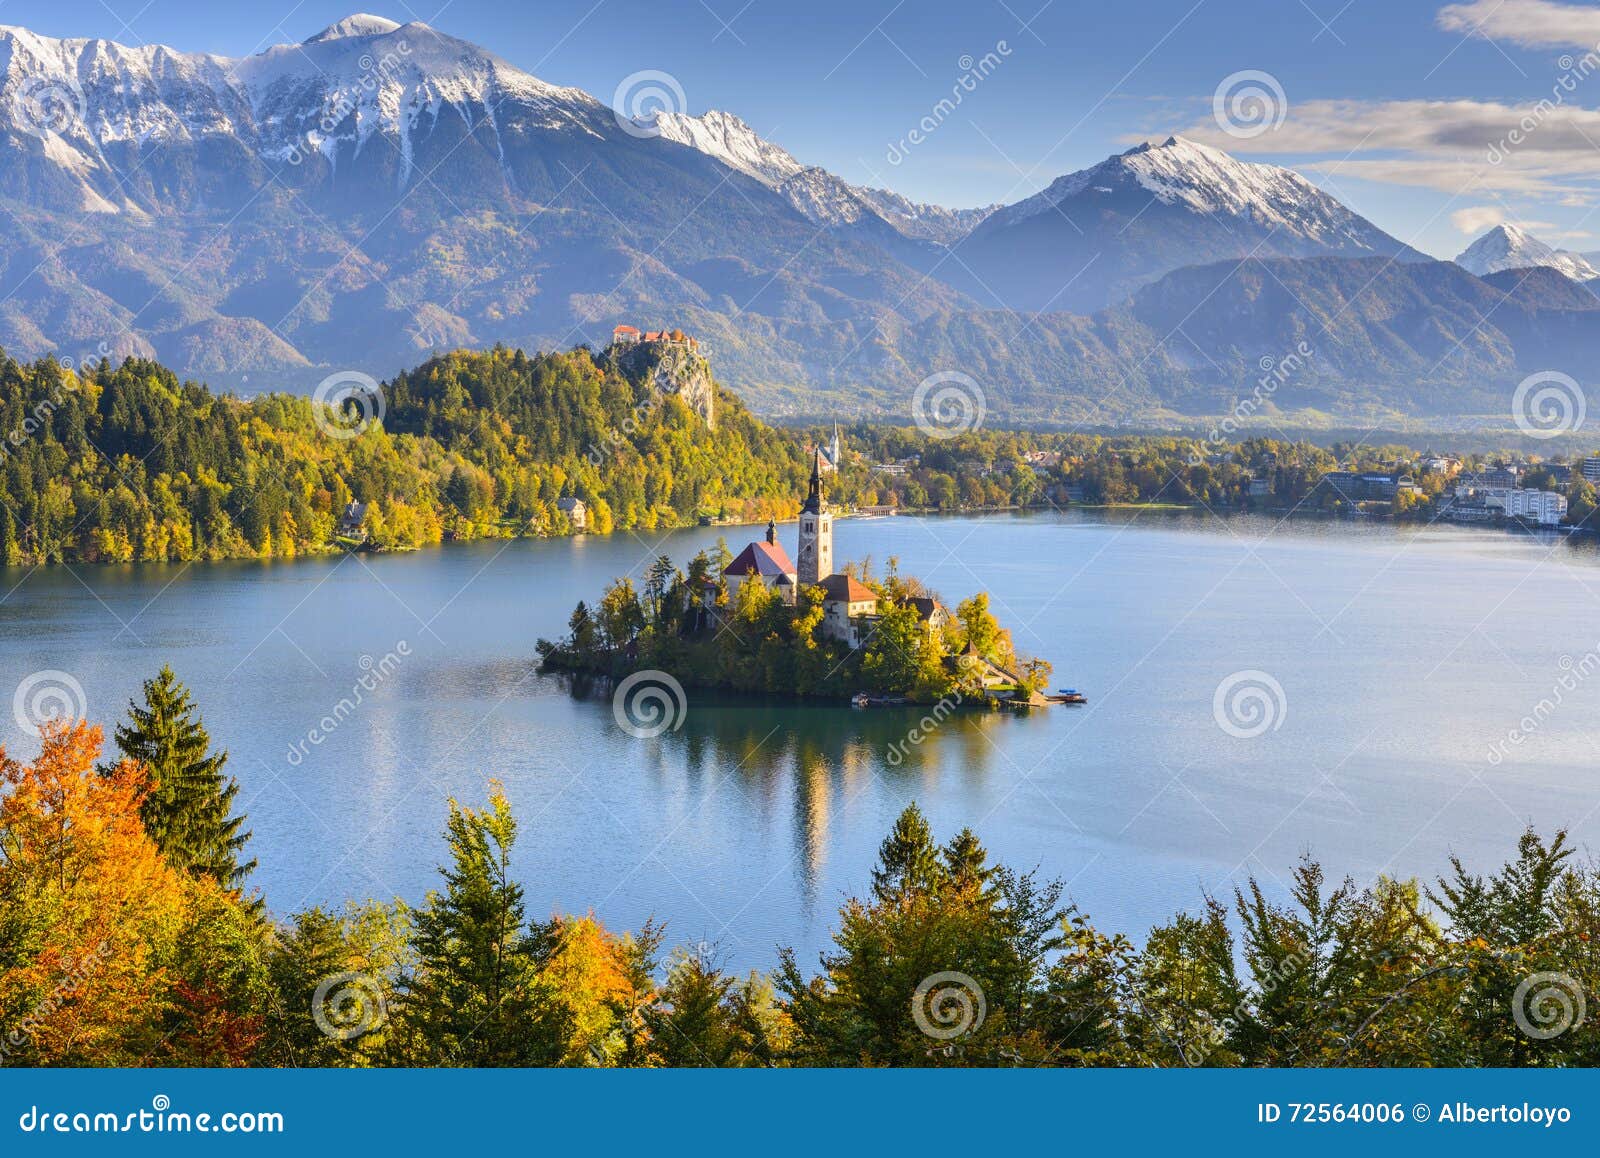 panoramic view of lake bled, slovenia